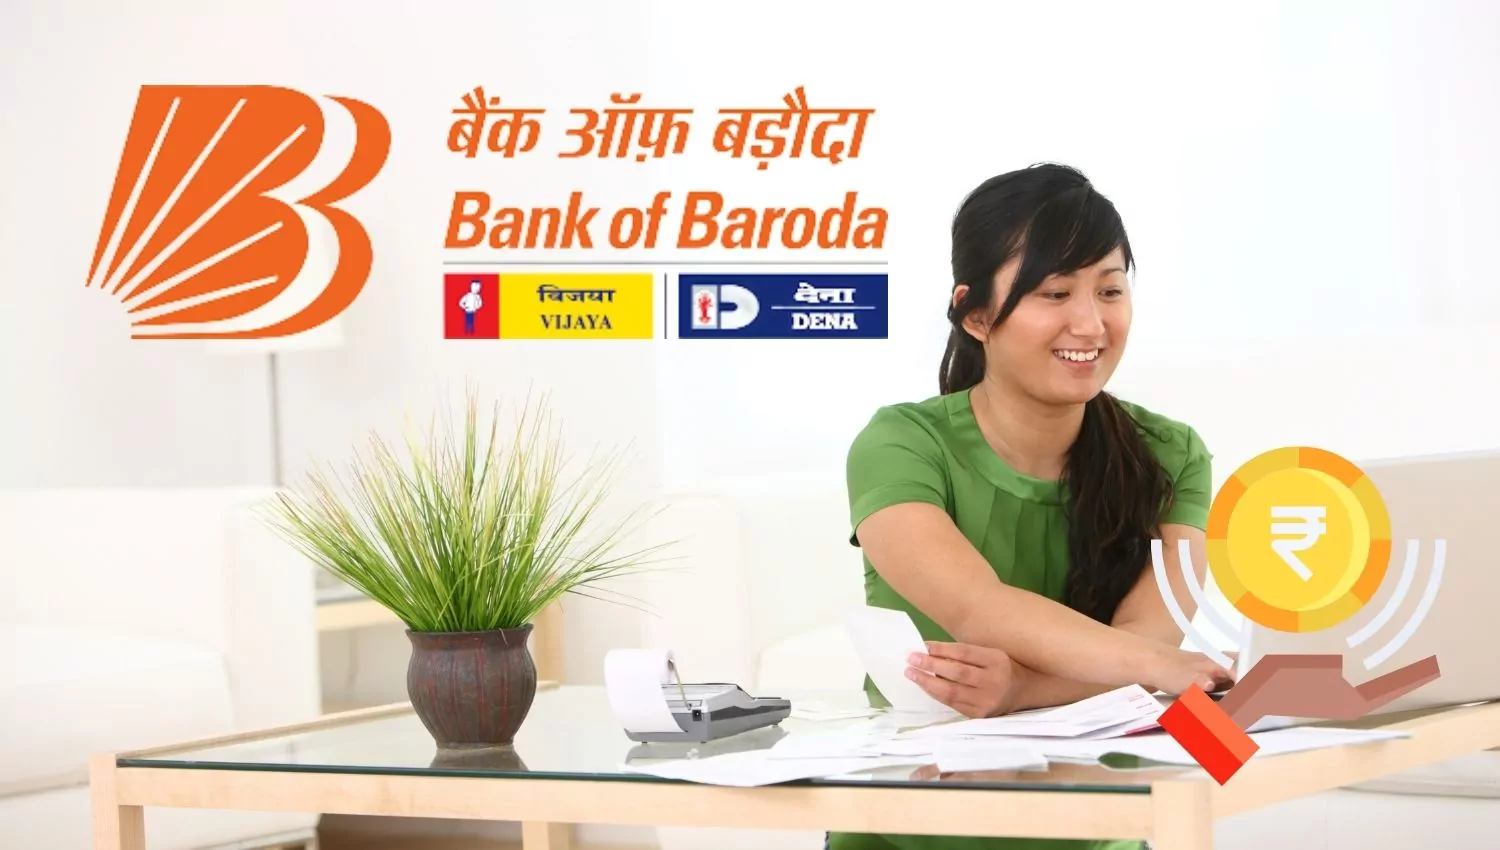 Bank of Baroda Mudra Loan Scheme